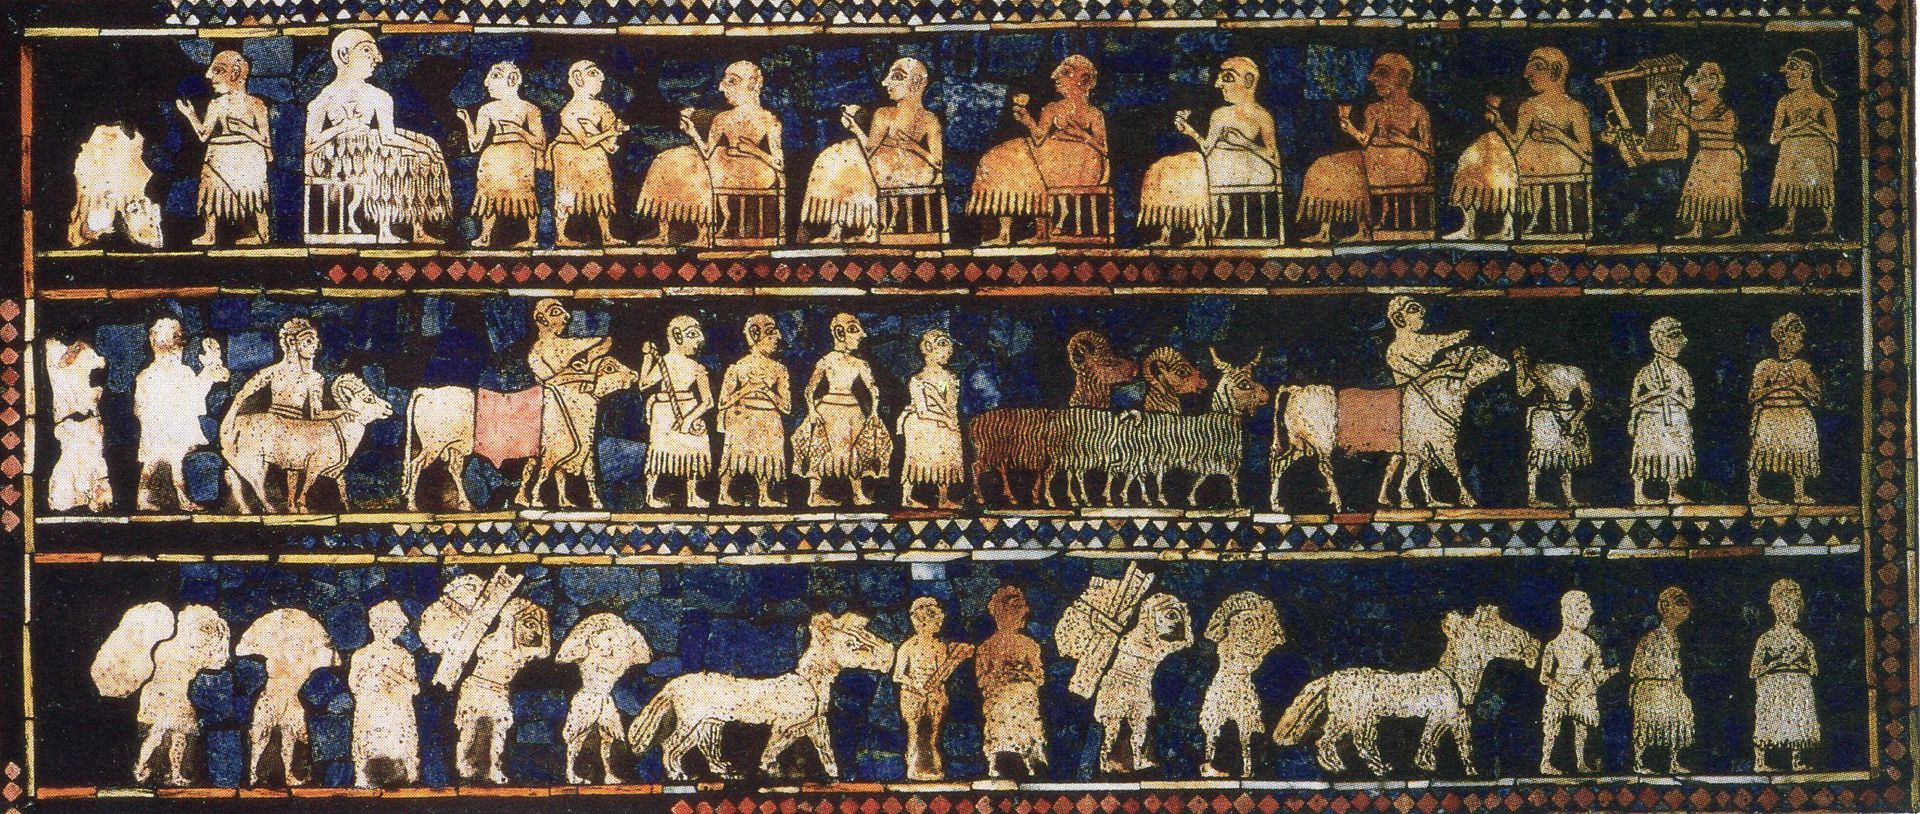 pre-jewish bronze age mythology